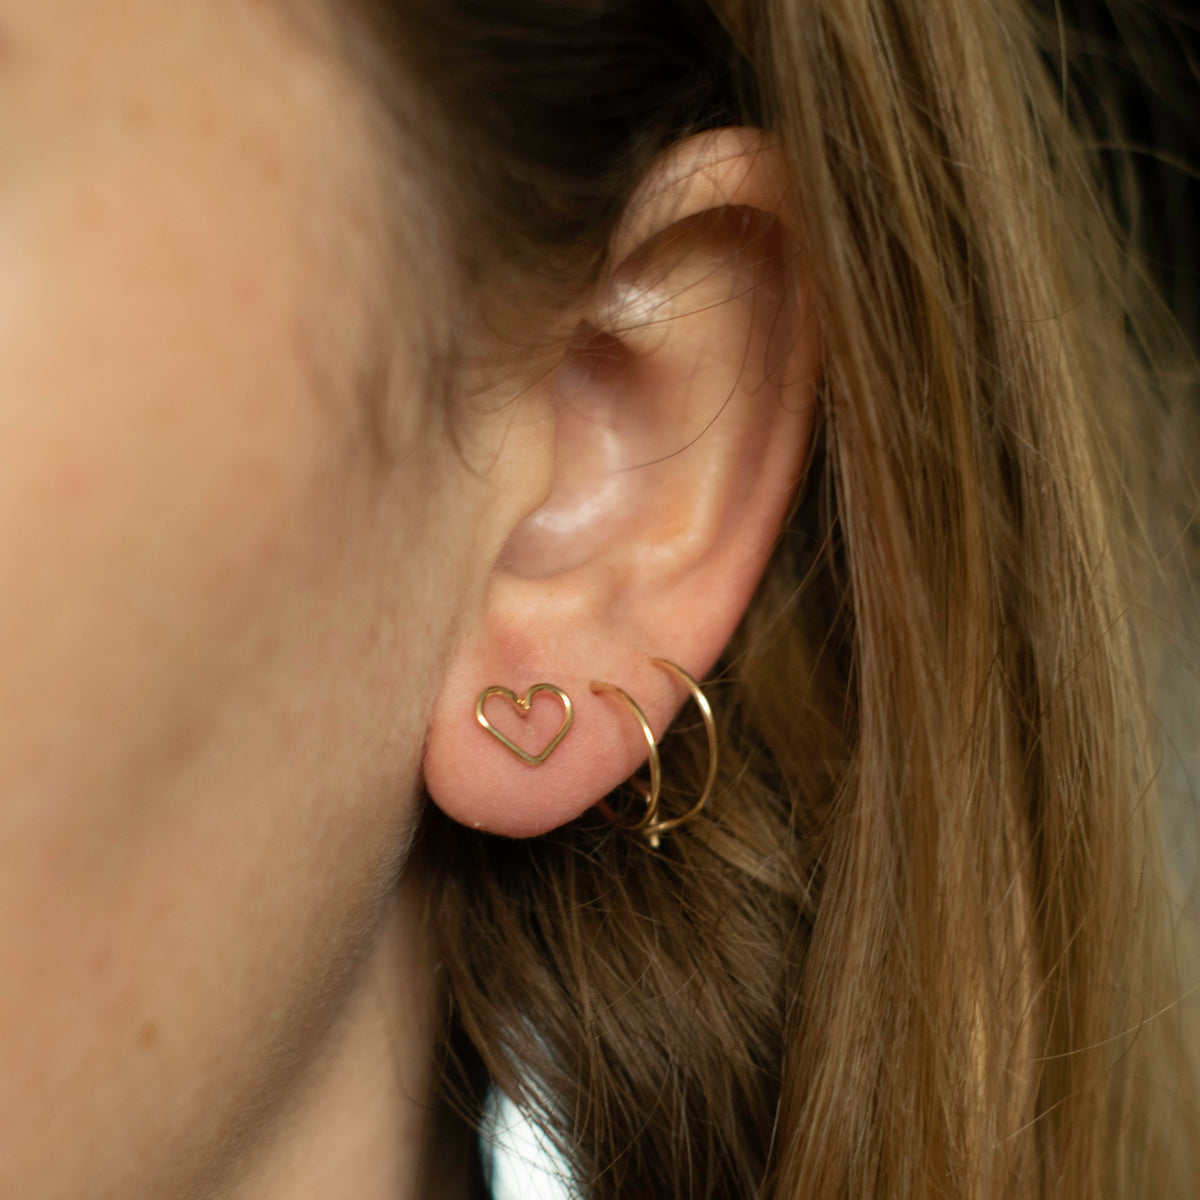 Tiny Heart Stud Earrings